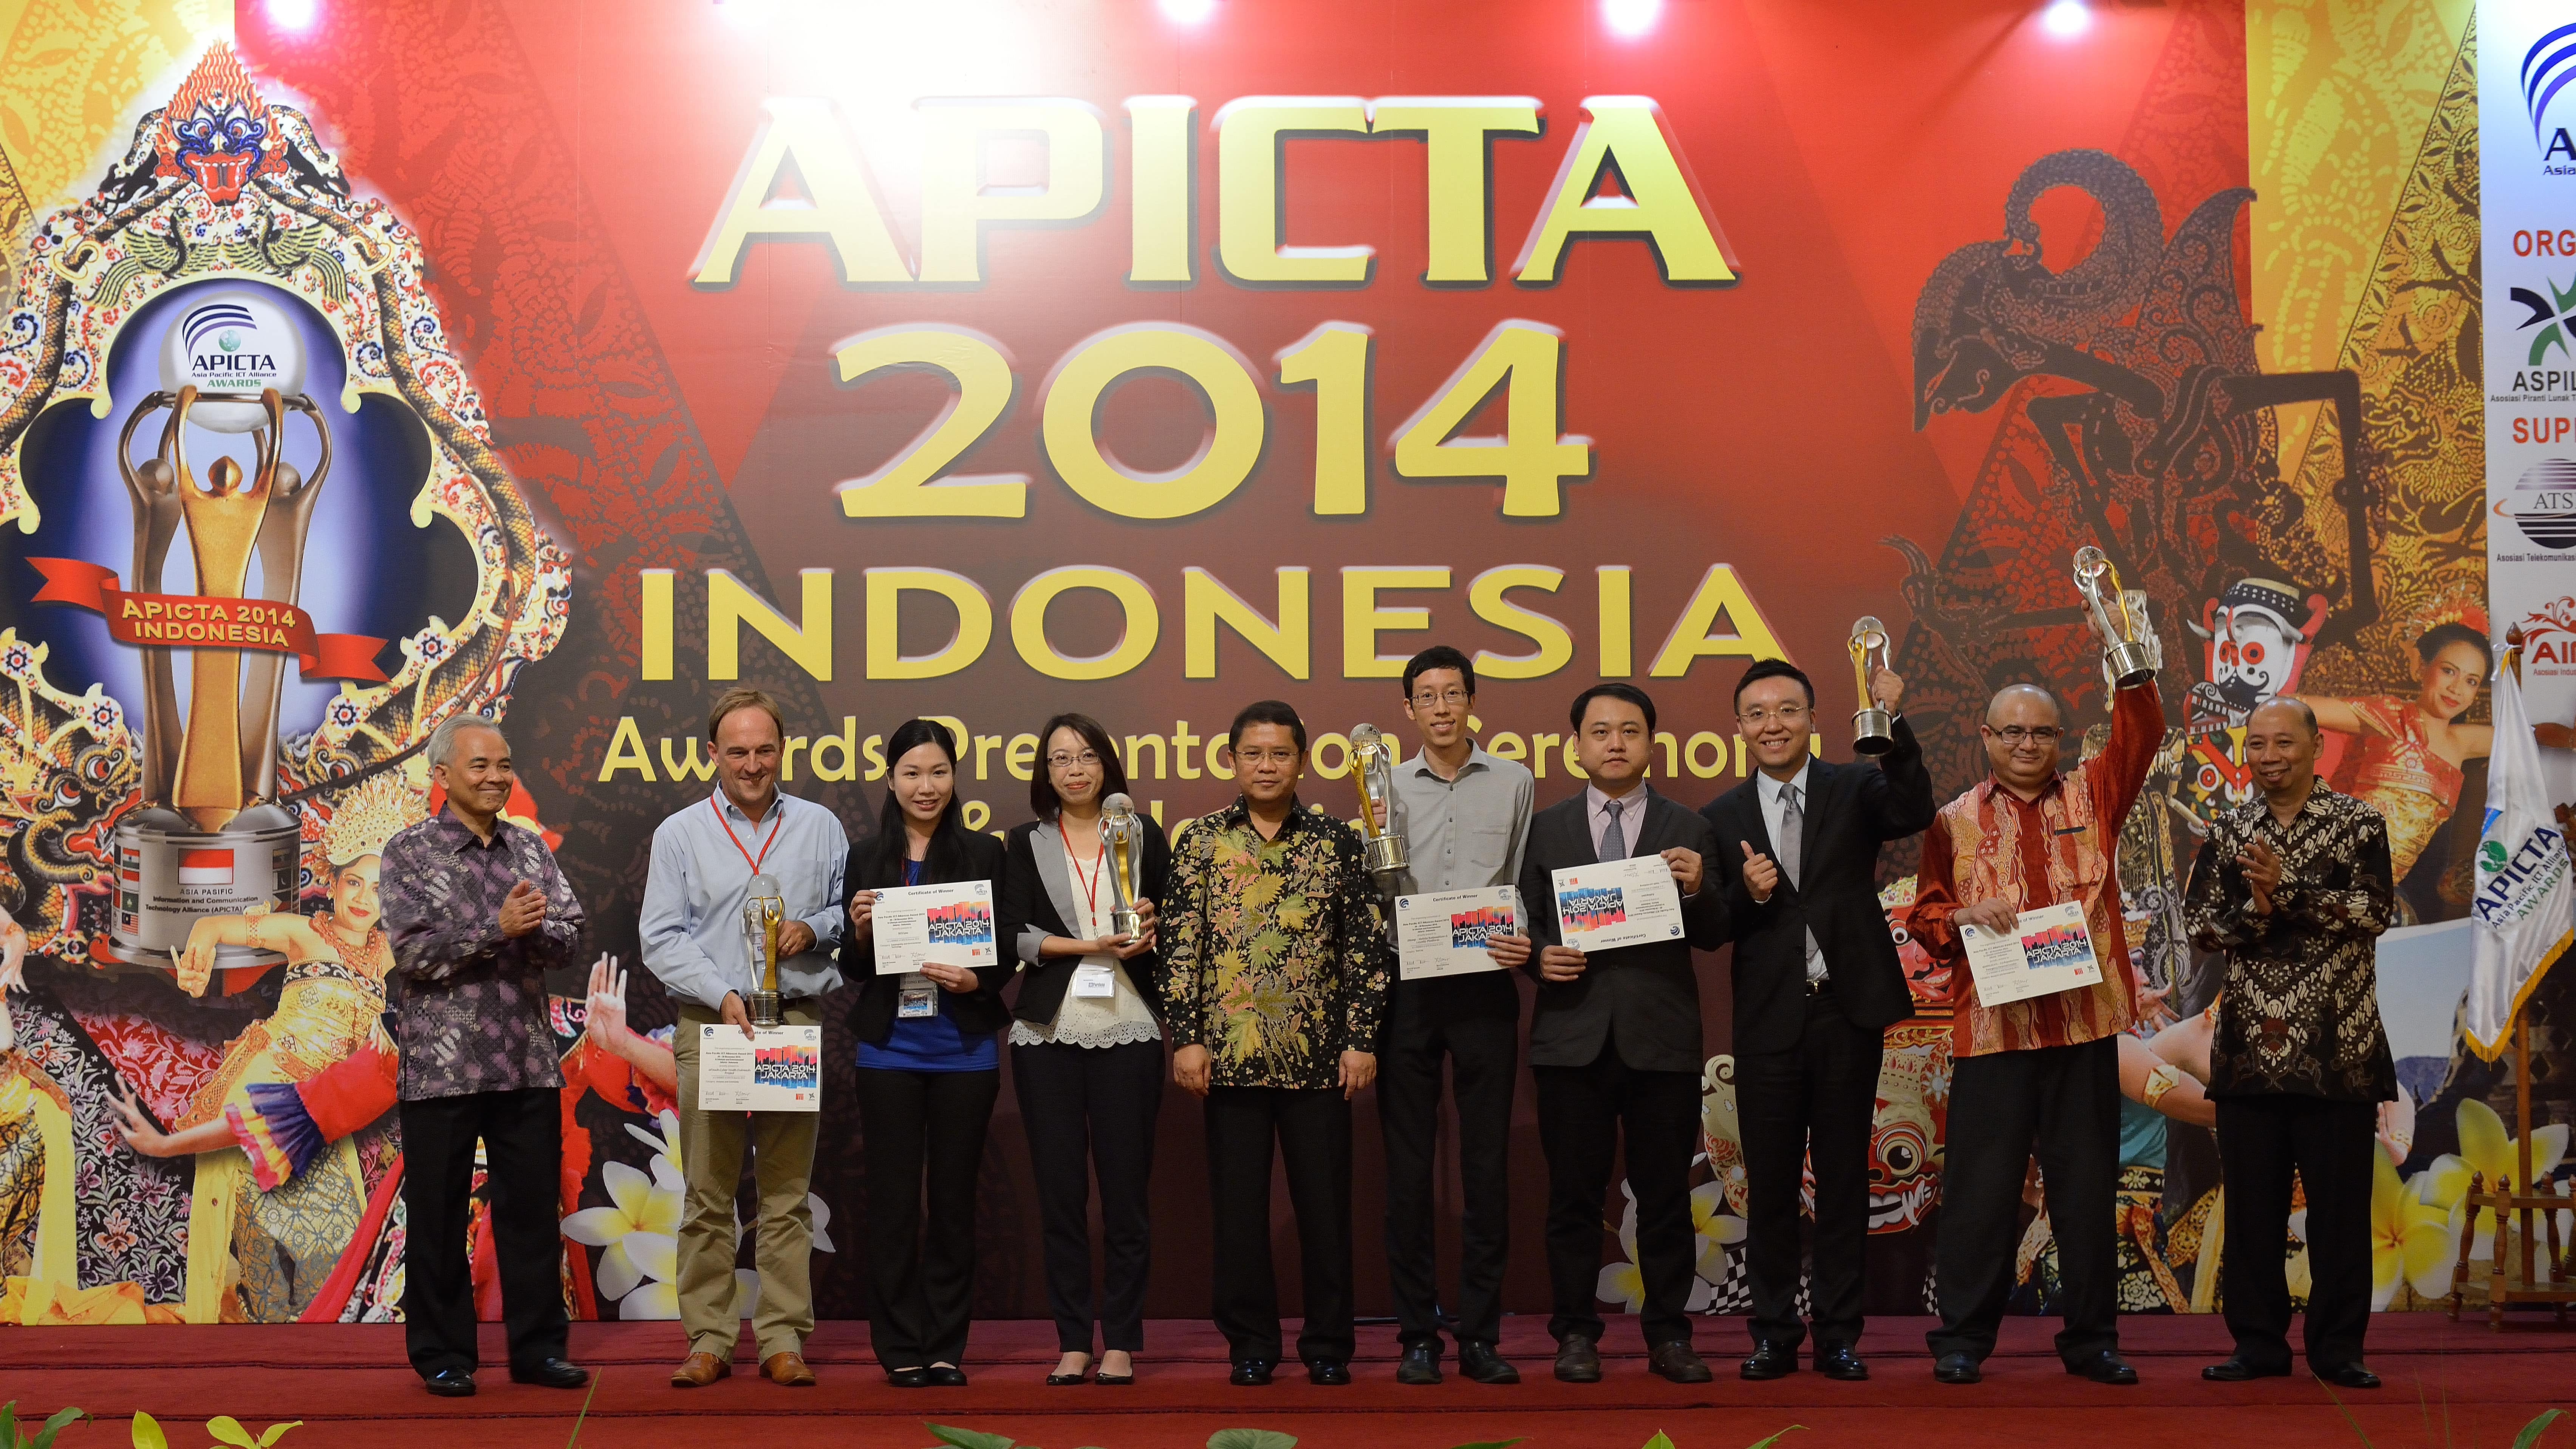 APICTA Awards@Indonesia